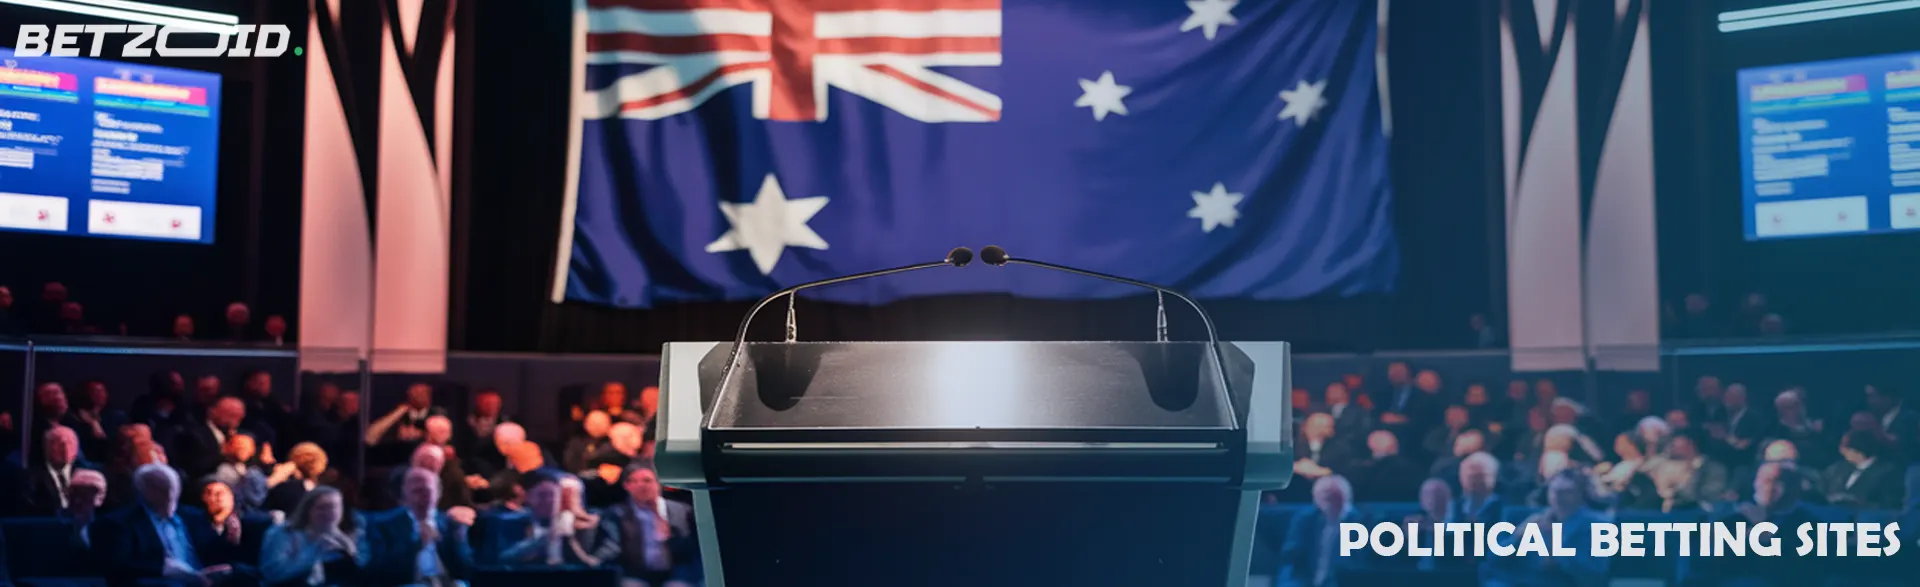 Political Betting in Australia - Betzoid.